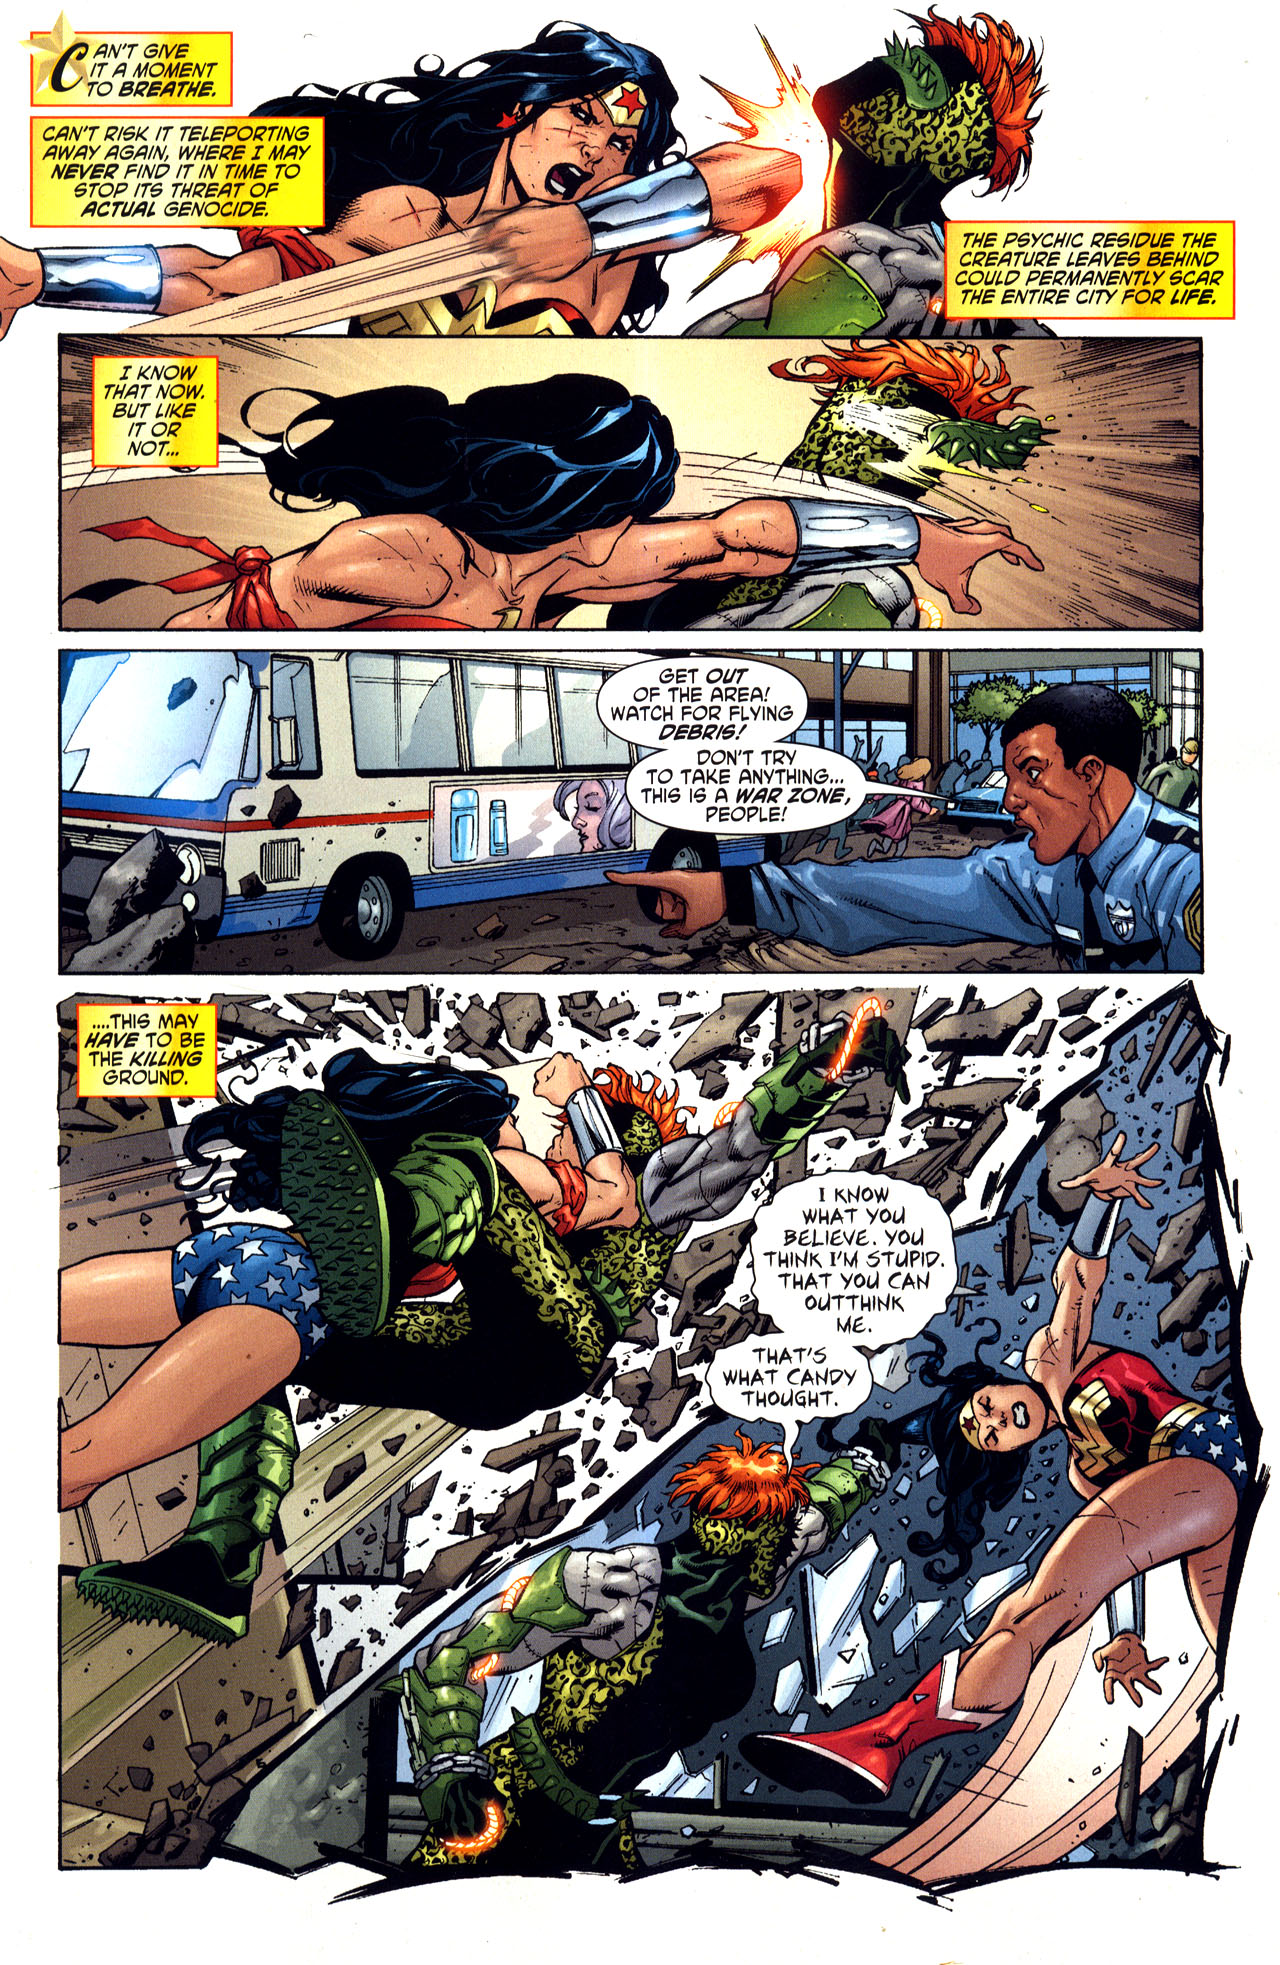 Wonder Woman (2006) 32 Page 5